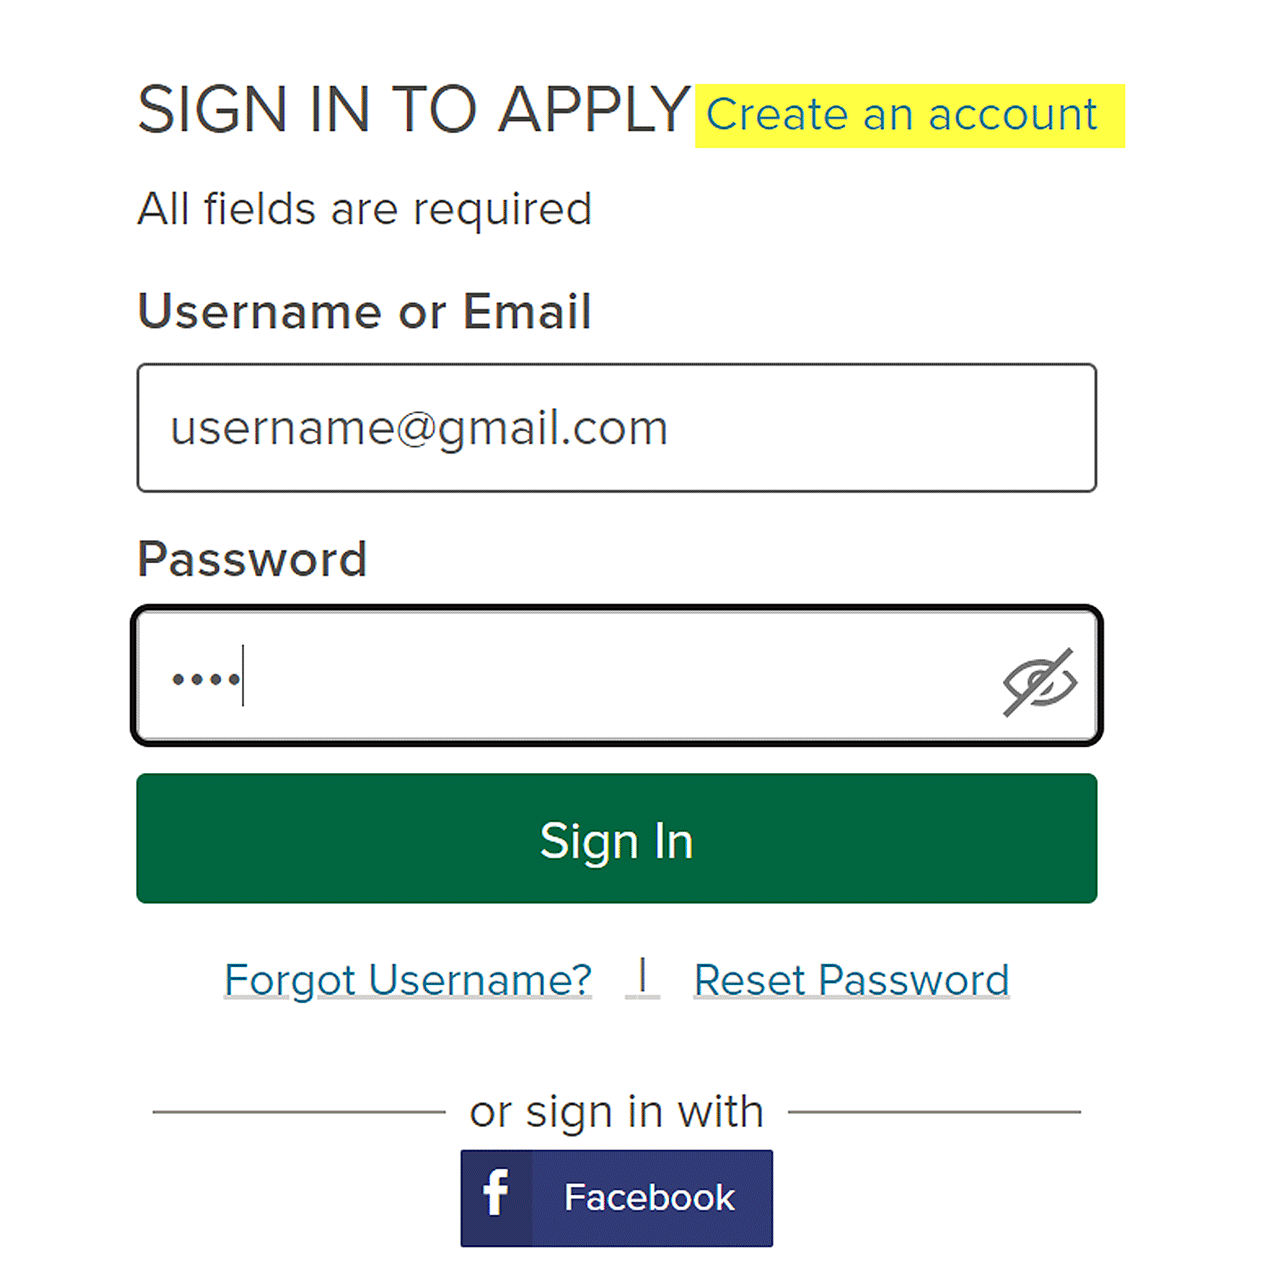 Sign in/Create an Account UI